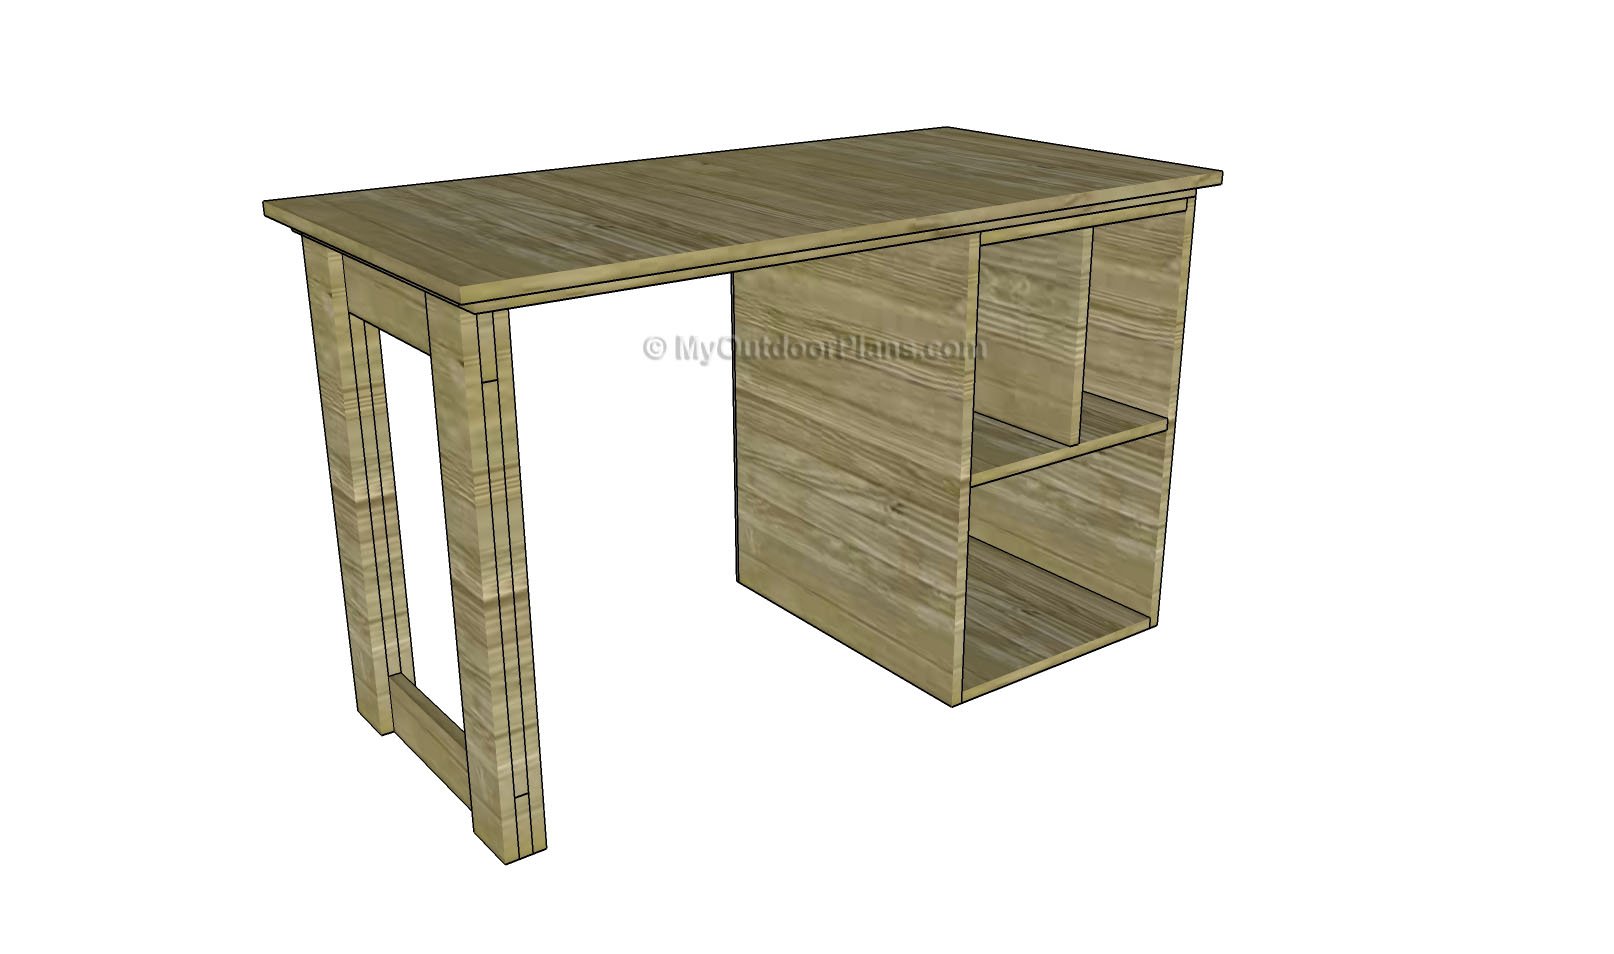 wooden desk plans free download all desks wayfair shop wayfair